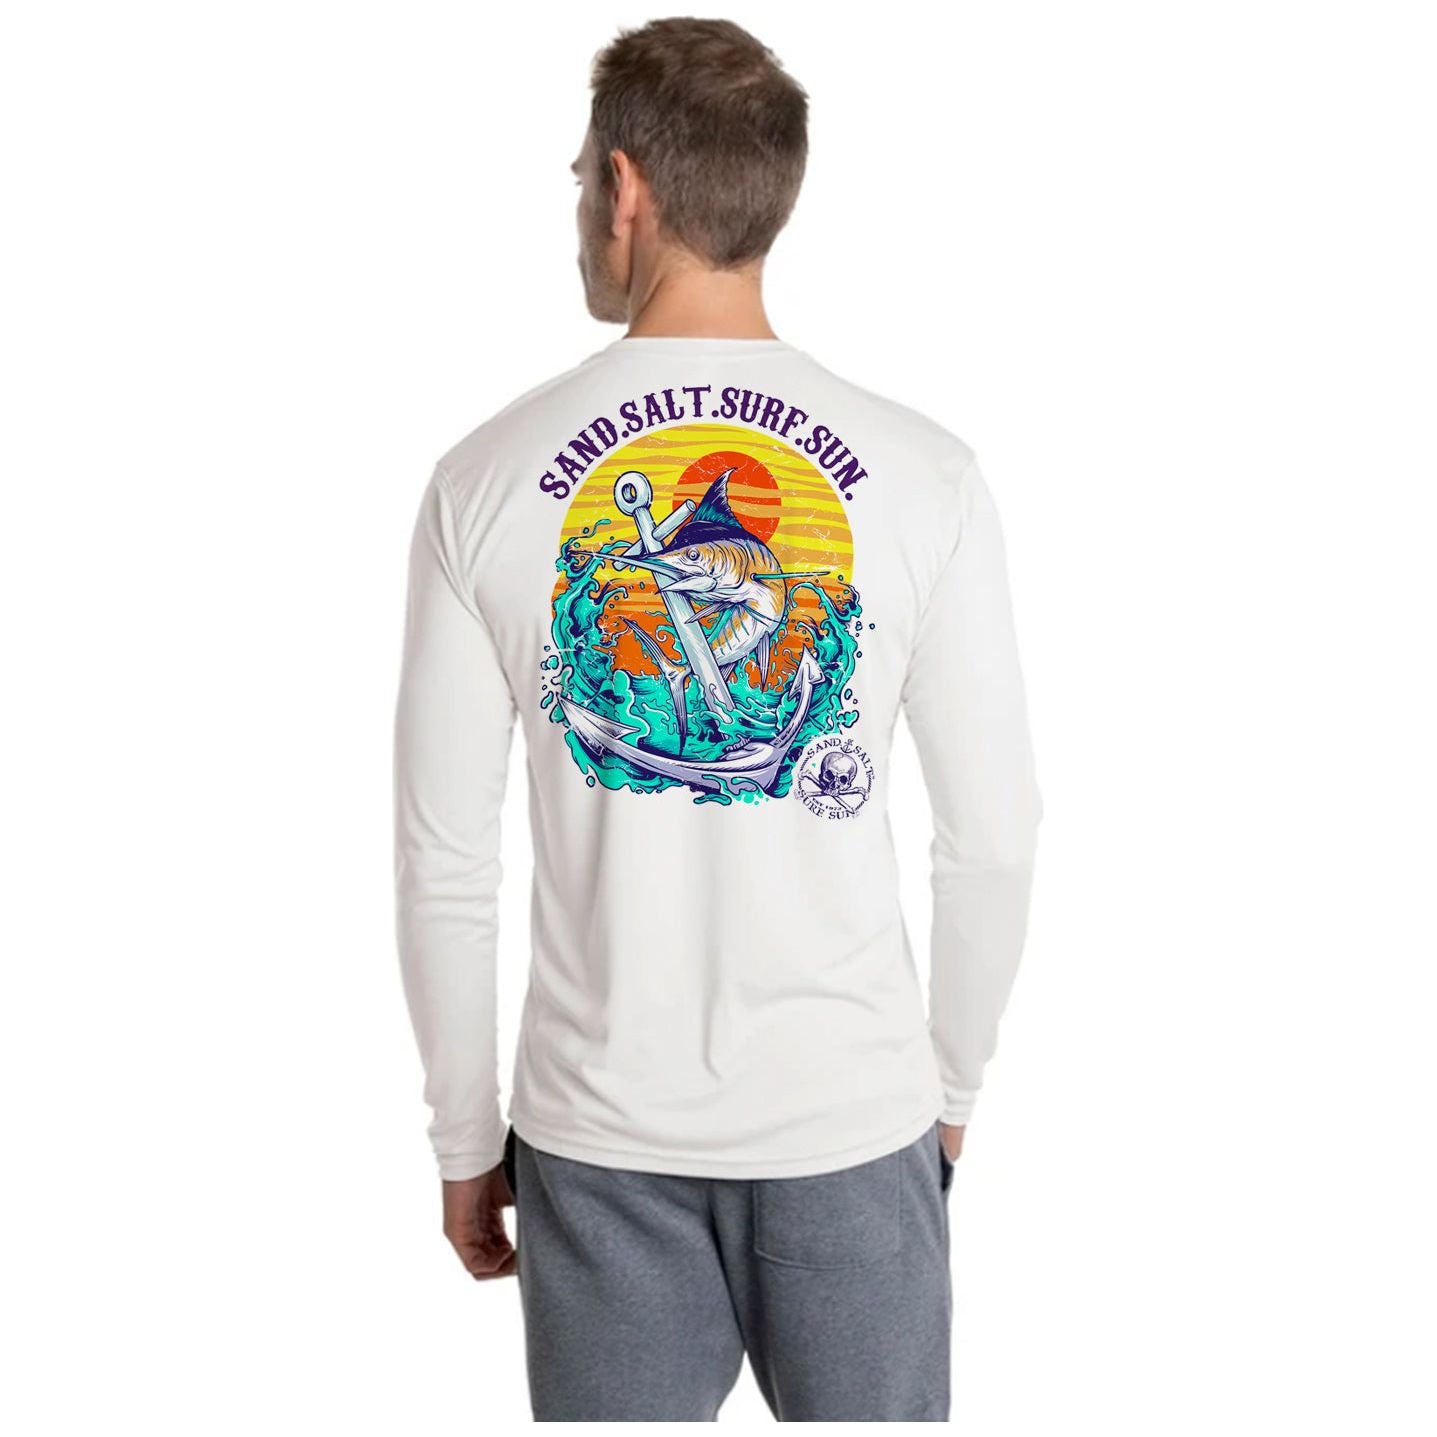 SAND.SALT.SURF.SUN. Marlin Men's Anchor UPF 50+ UV Sun Protection Performance Long Sleeve T-Shirt Small / White